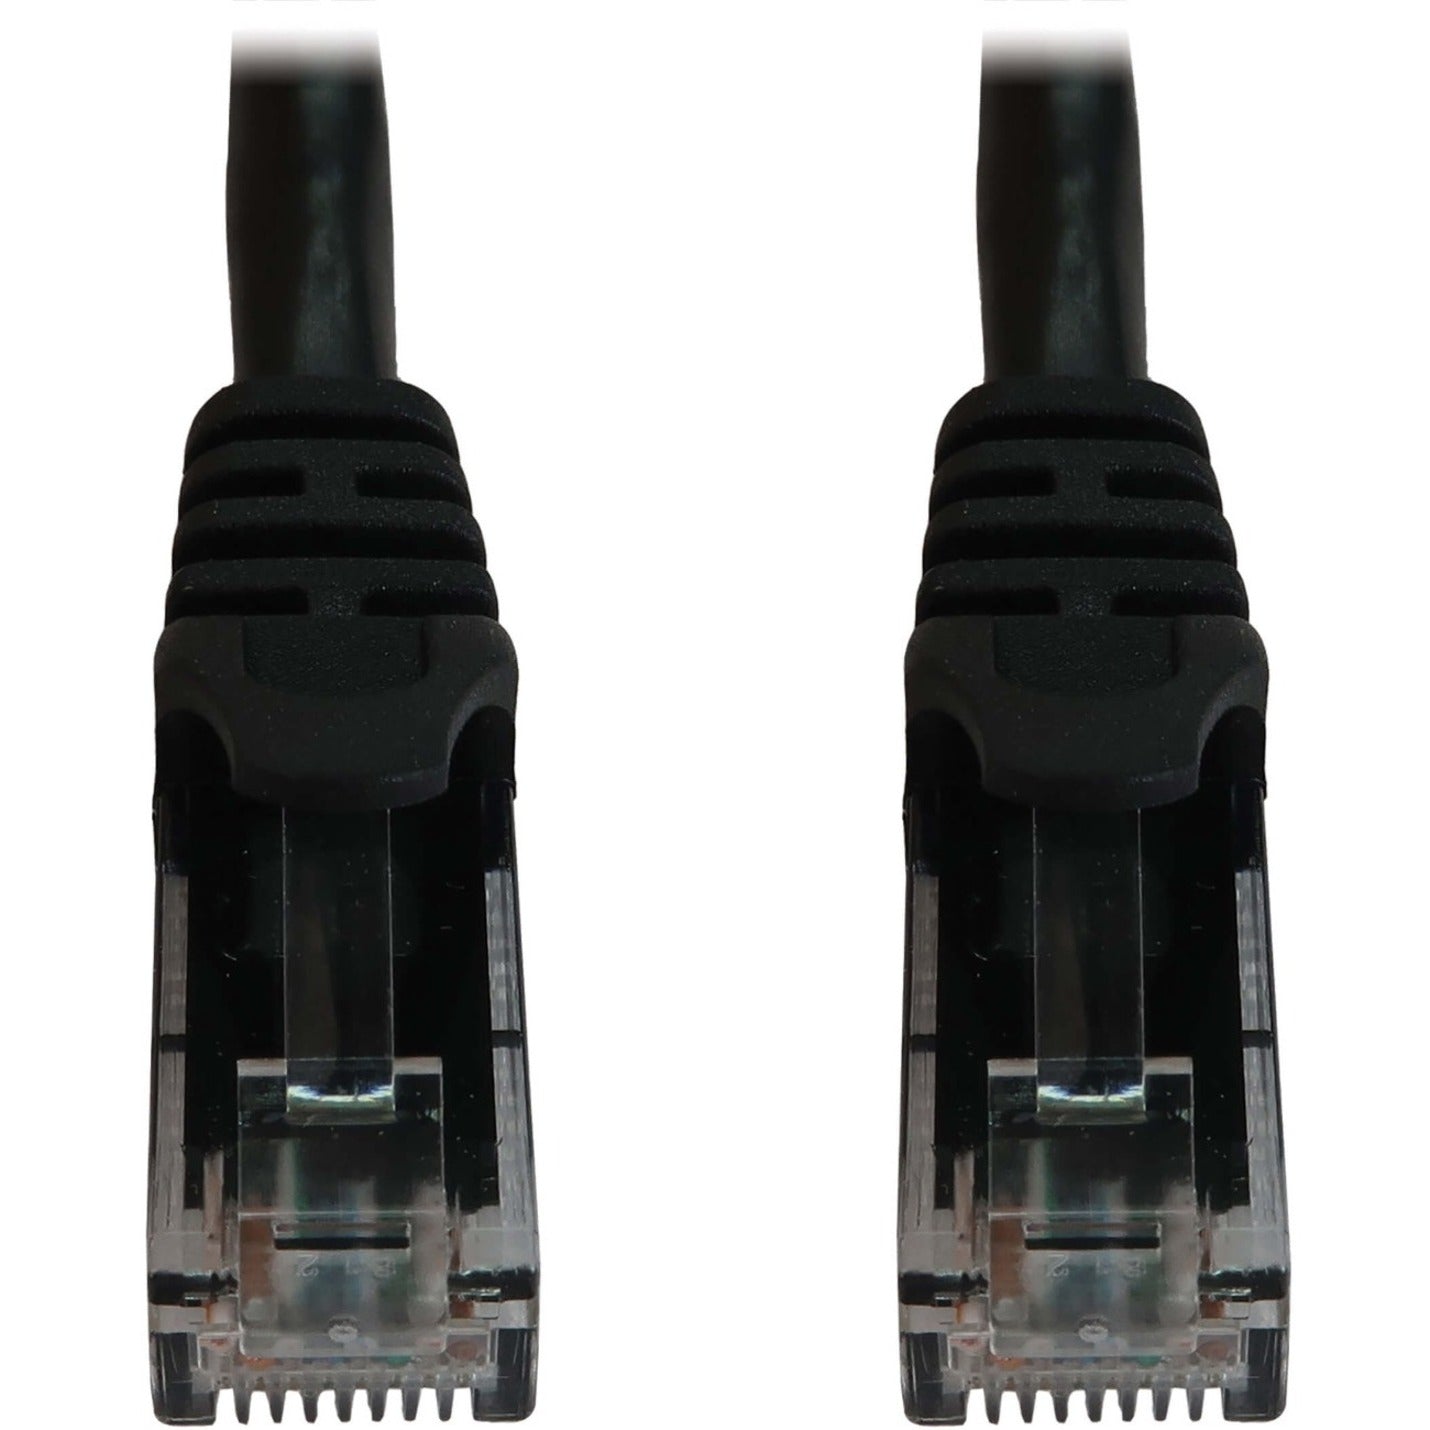 Tripp Lite N261-006-BK Cat.6a UTP Network Cable, 10G PoE, Snagless Molded, Black 6ft